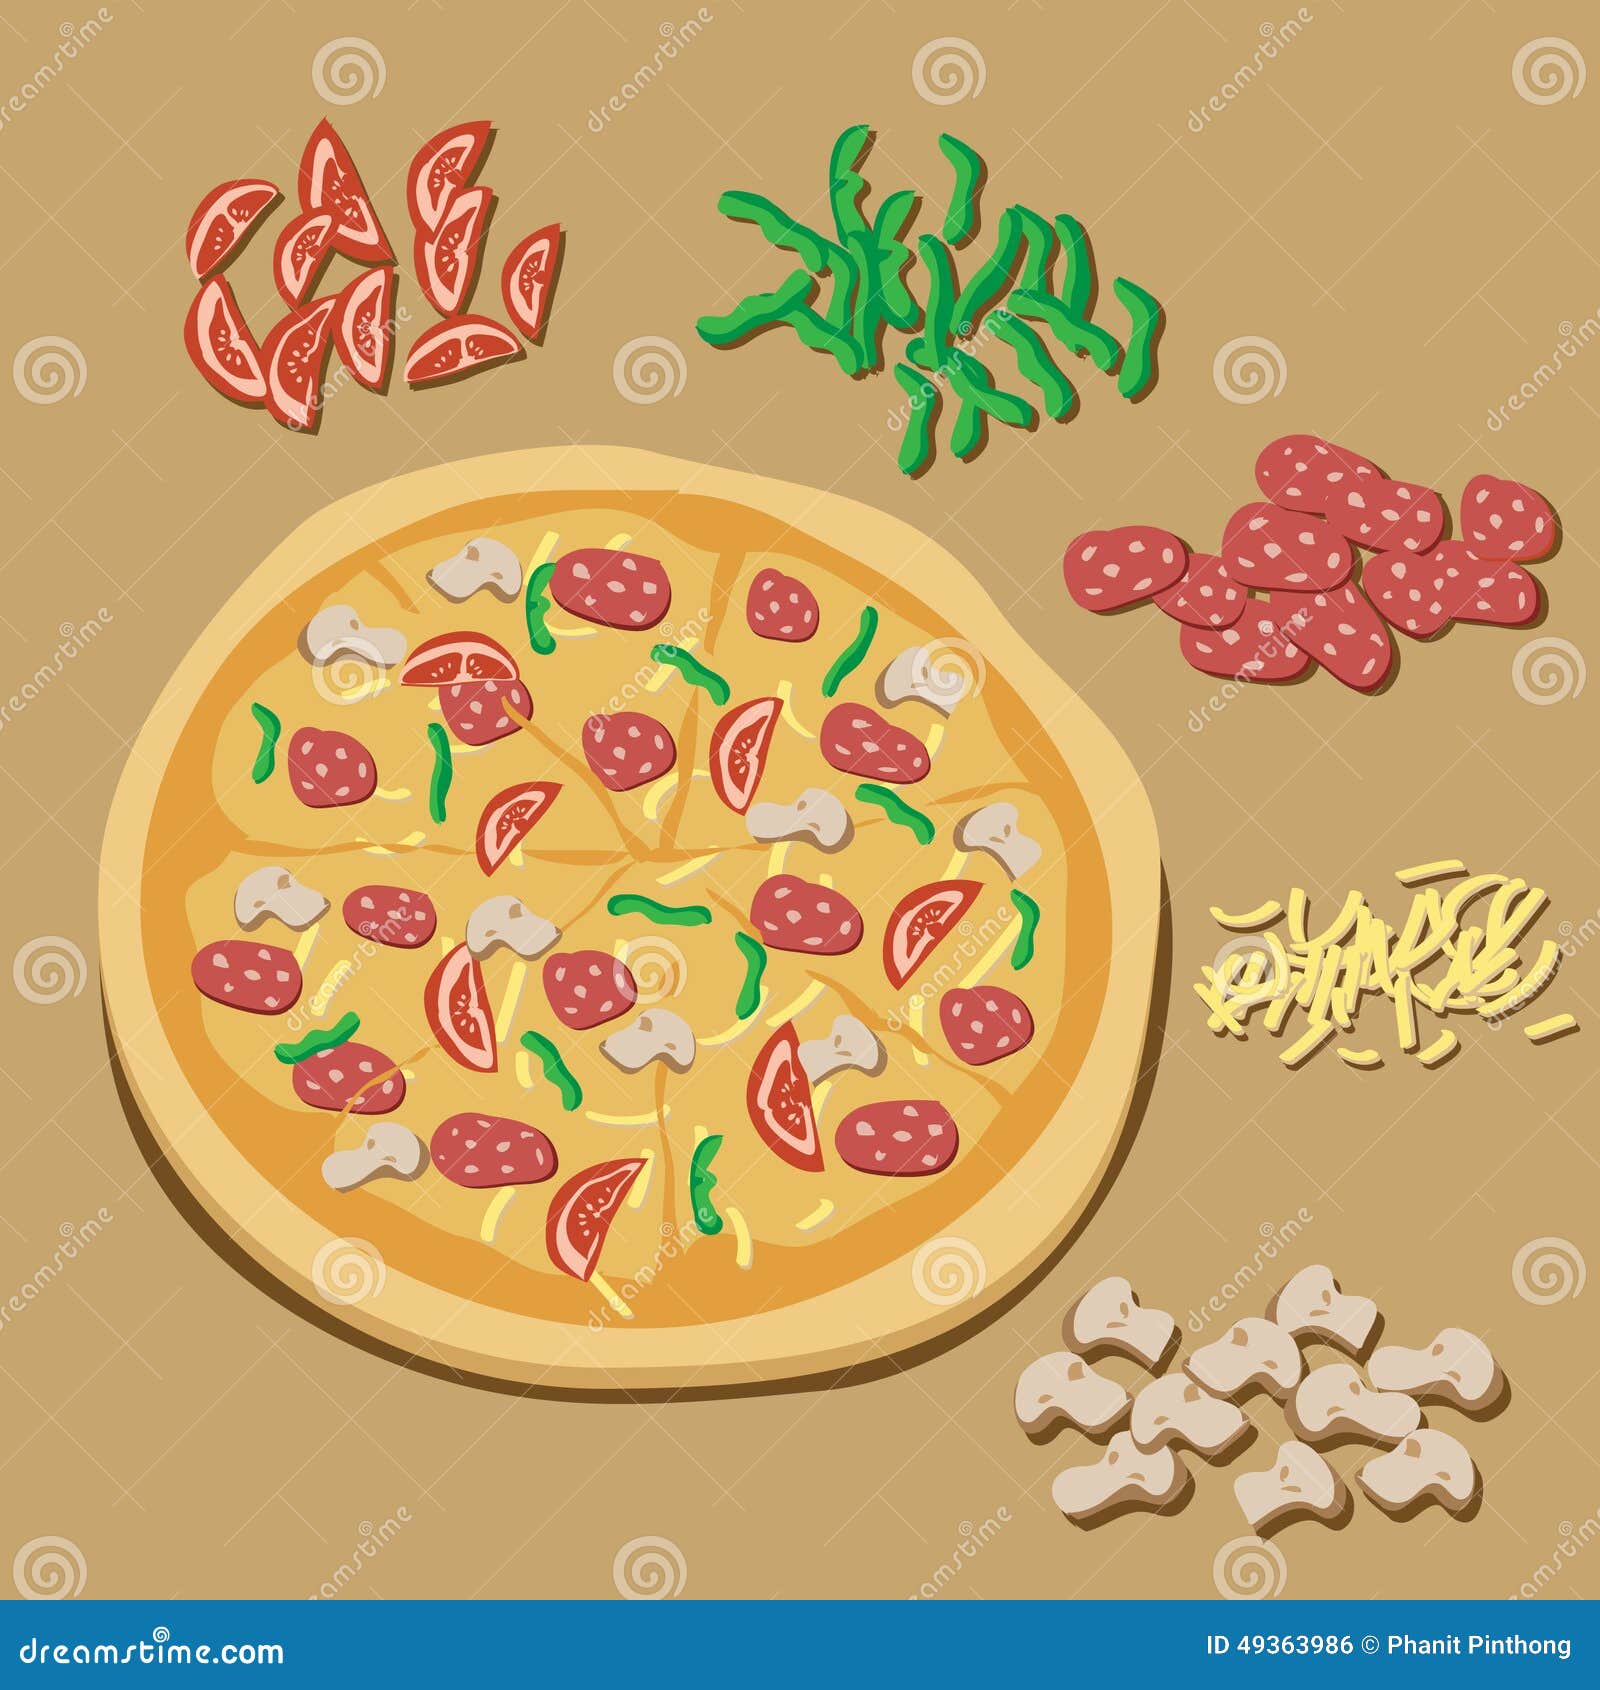 125 Slide Pizza Stock Illustrations, Vectors & Clipart - Dreamstime